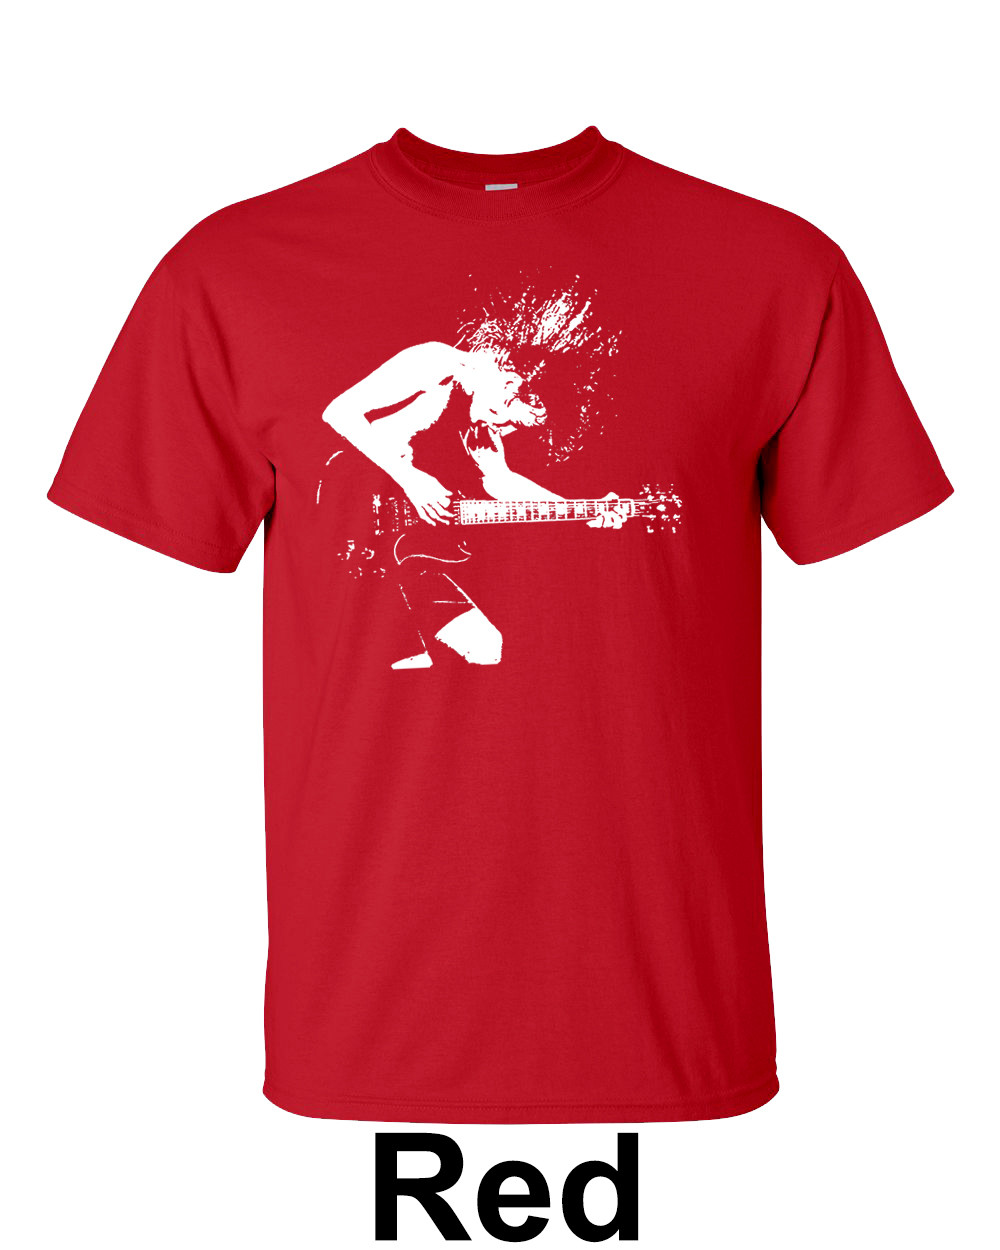 Angus Young T Shirt AcDc - BlackSheepShirts